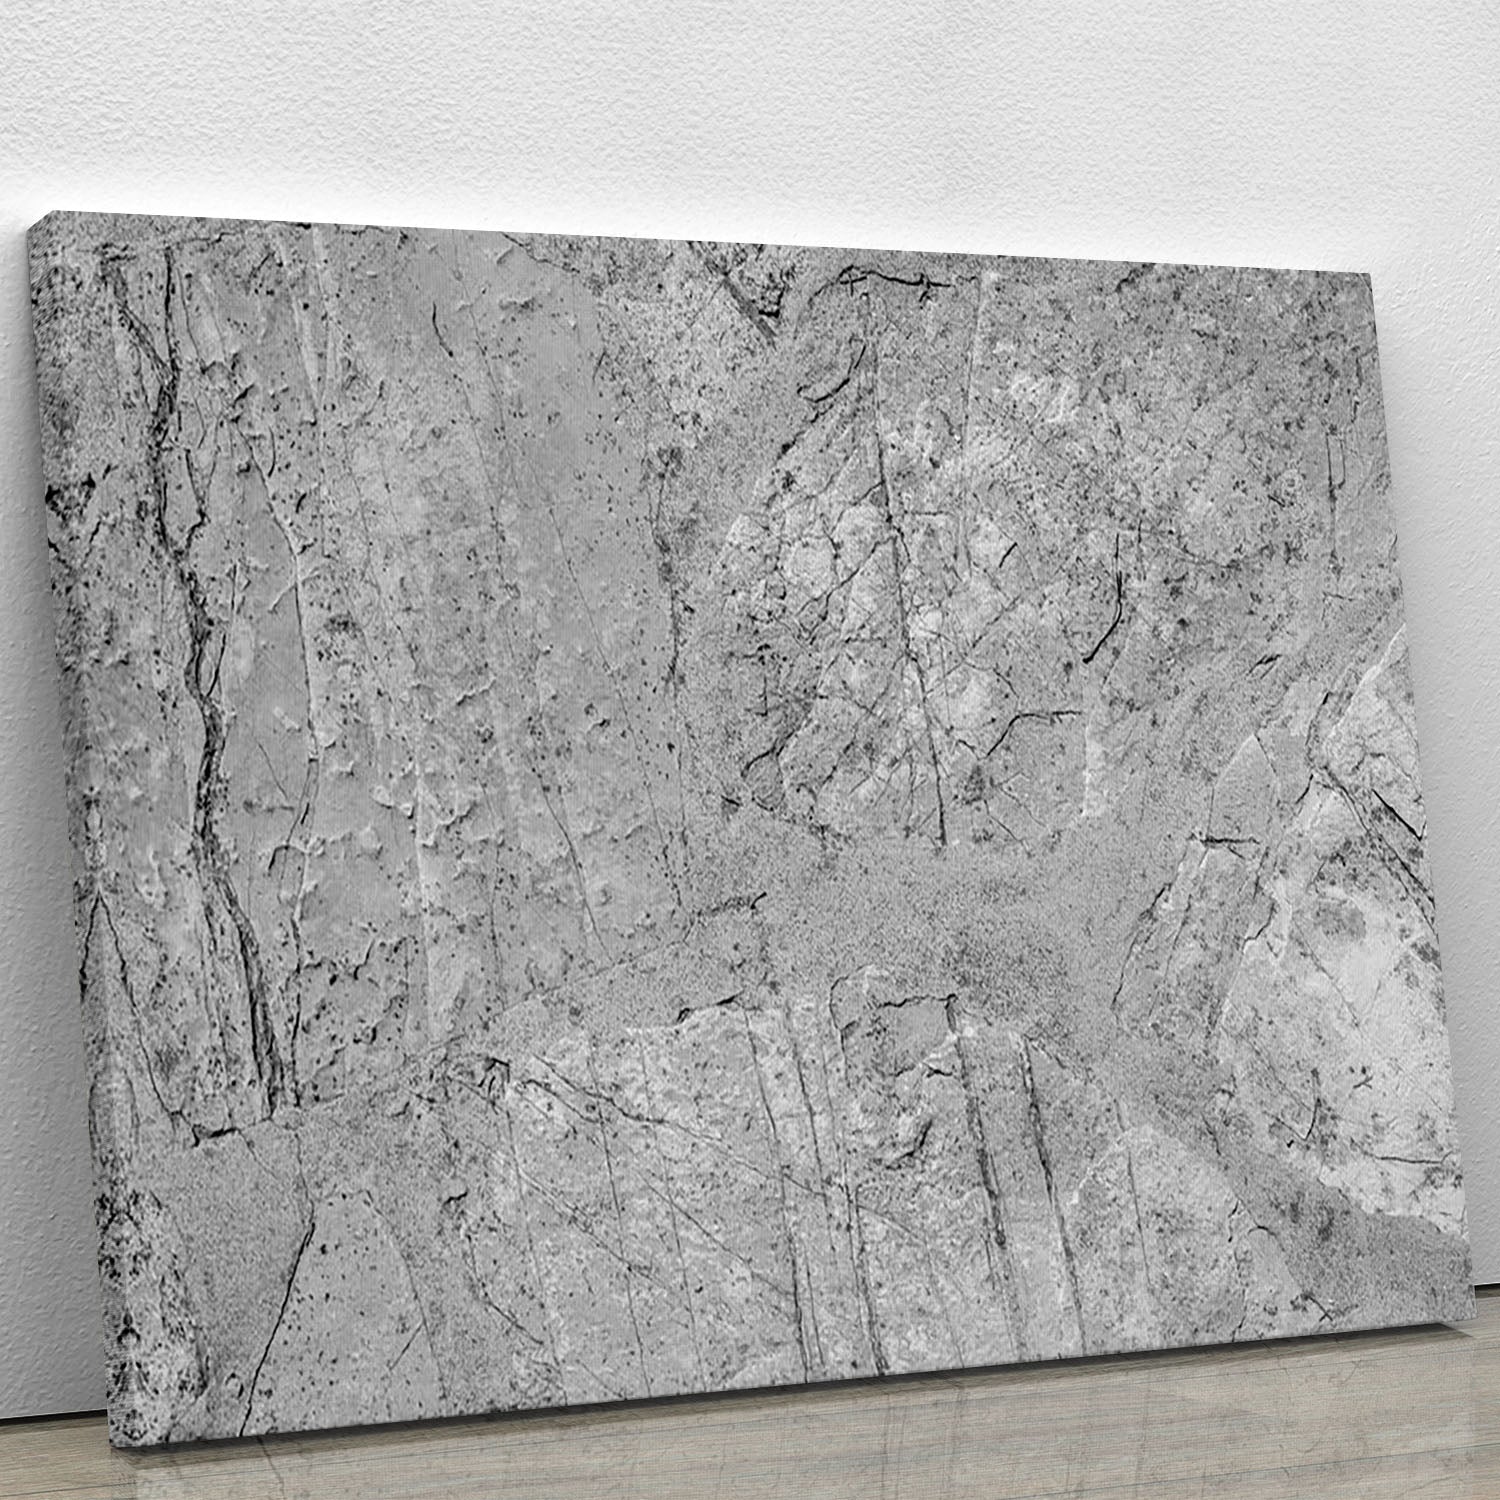 Stone concrete floor Canvas Print or Poster - Canvas Art Rocks - 1